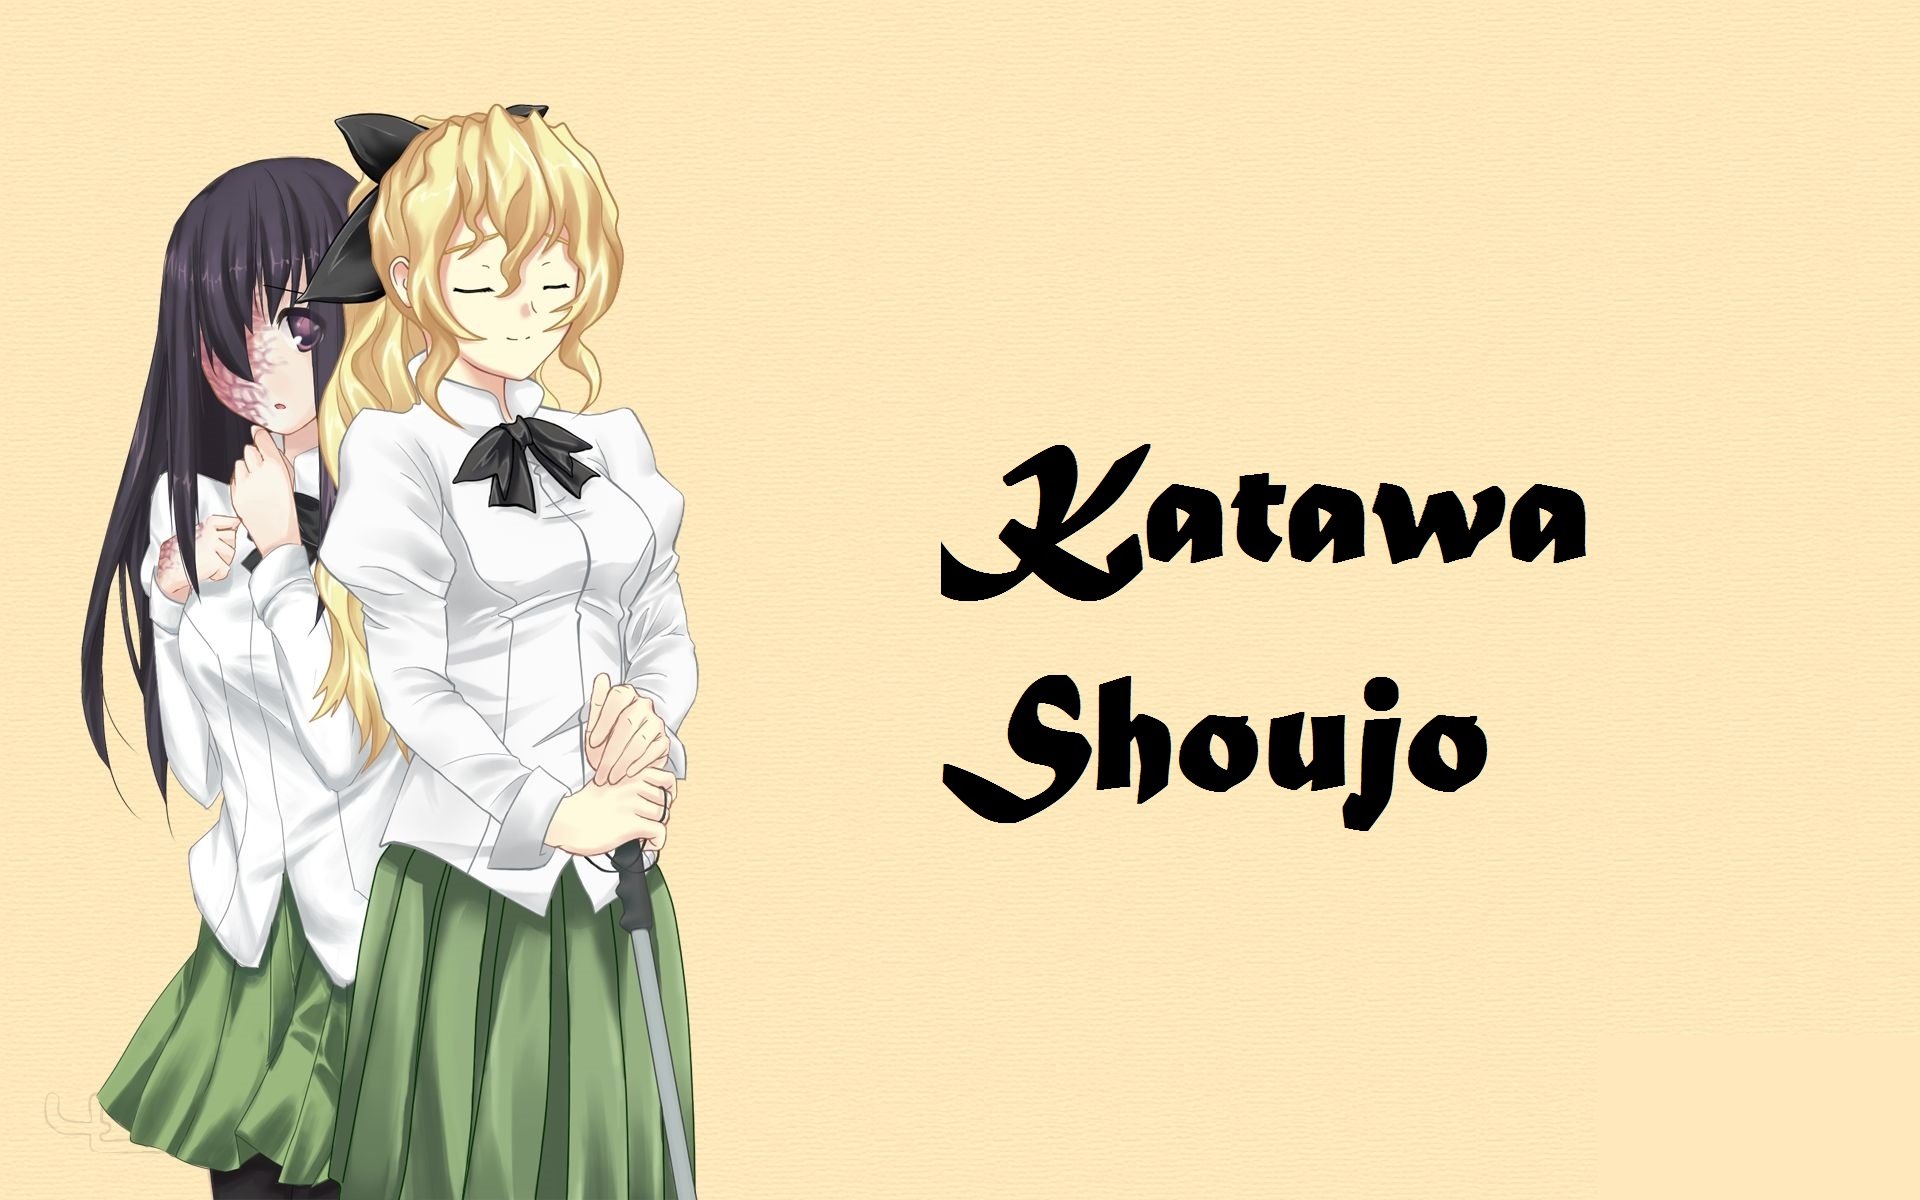 Katawa shoujo персонажи. Katawa Shoujo Миша. Katawa Shoujo Act 1. Катава Шоджо Эми. Katawa Shoujo обложка.